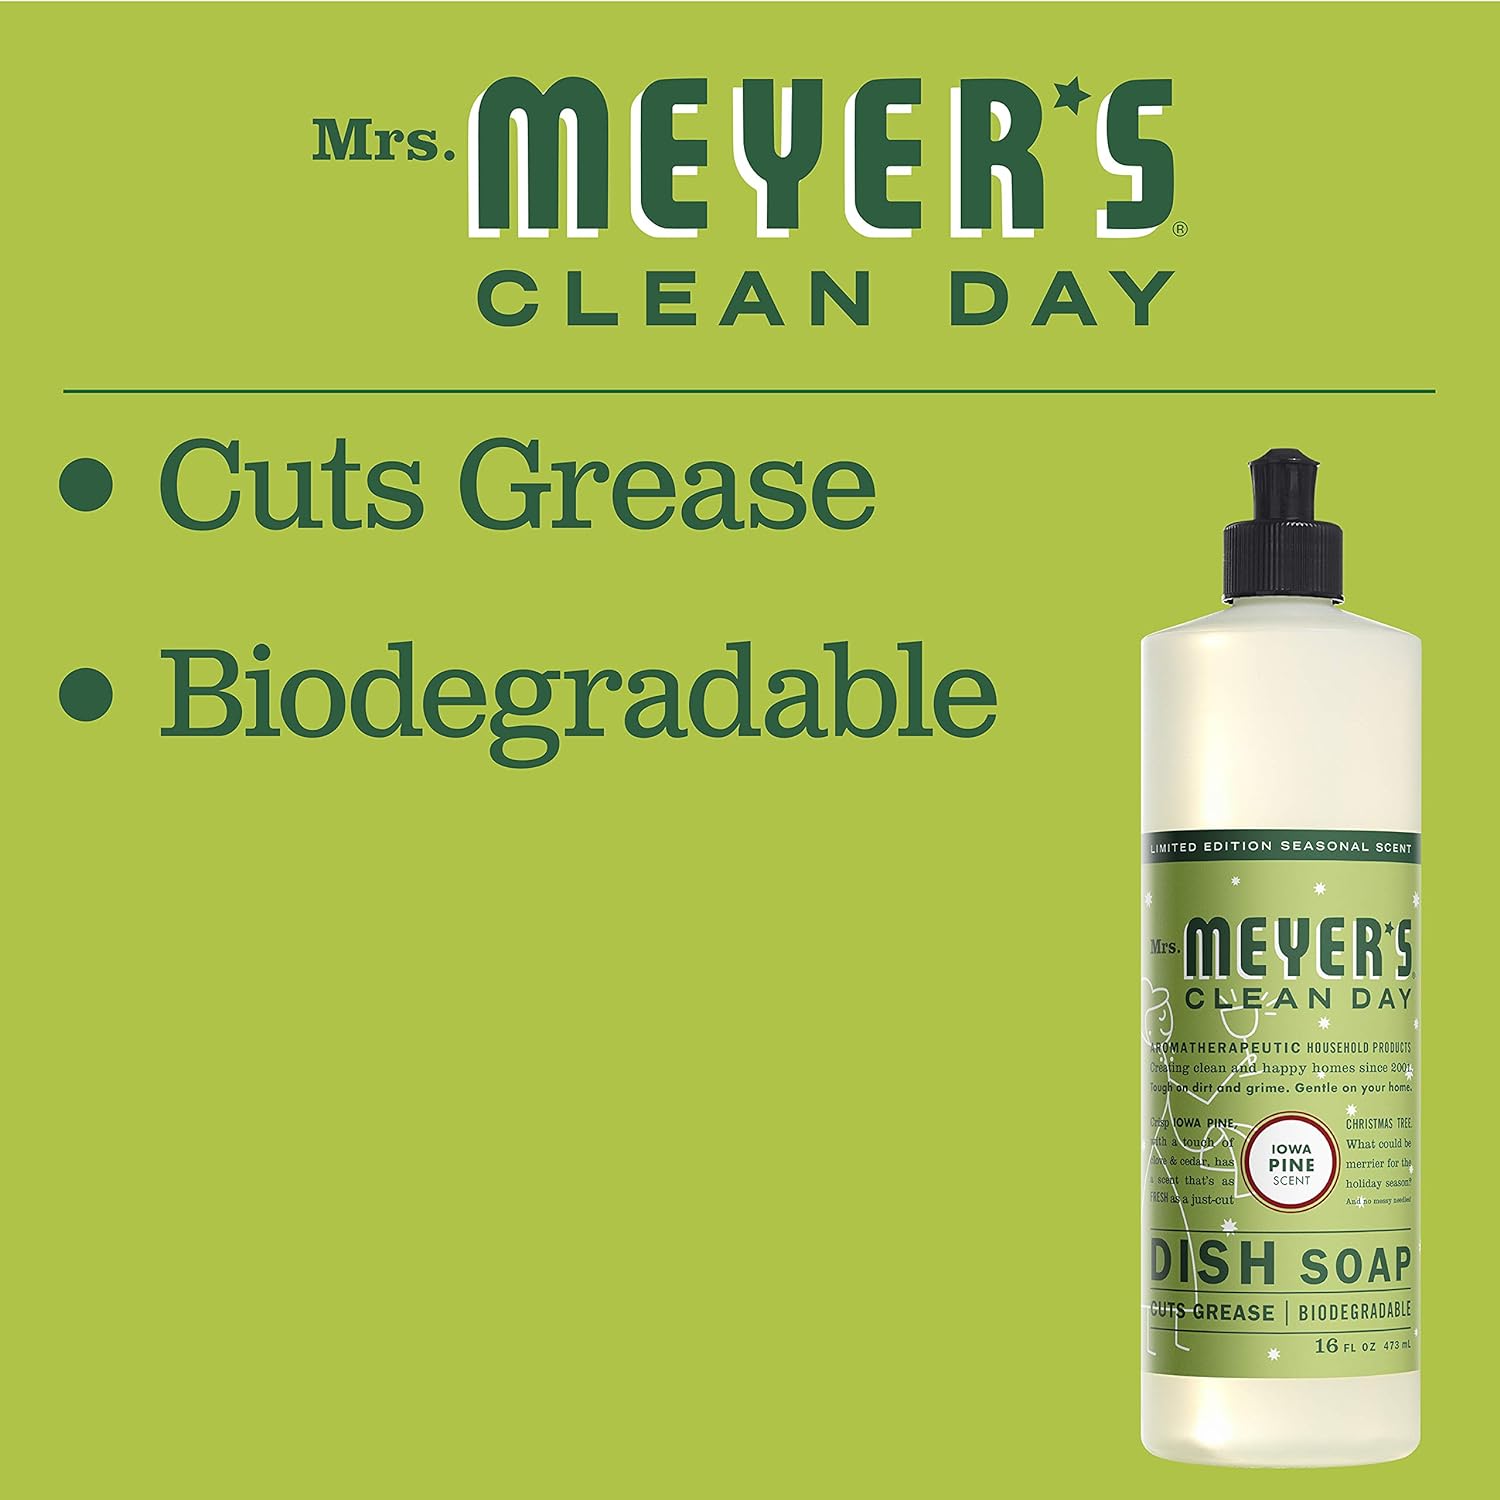 MRS. MEYER'S CLEAN DAY Liquid Dish Soap, Biodegradable Formula, Limited Edition Iowa Pine, 16 fl. oz : Health & Household